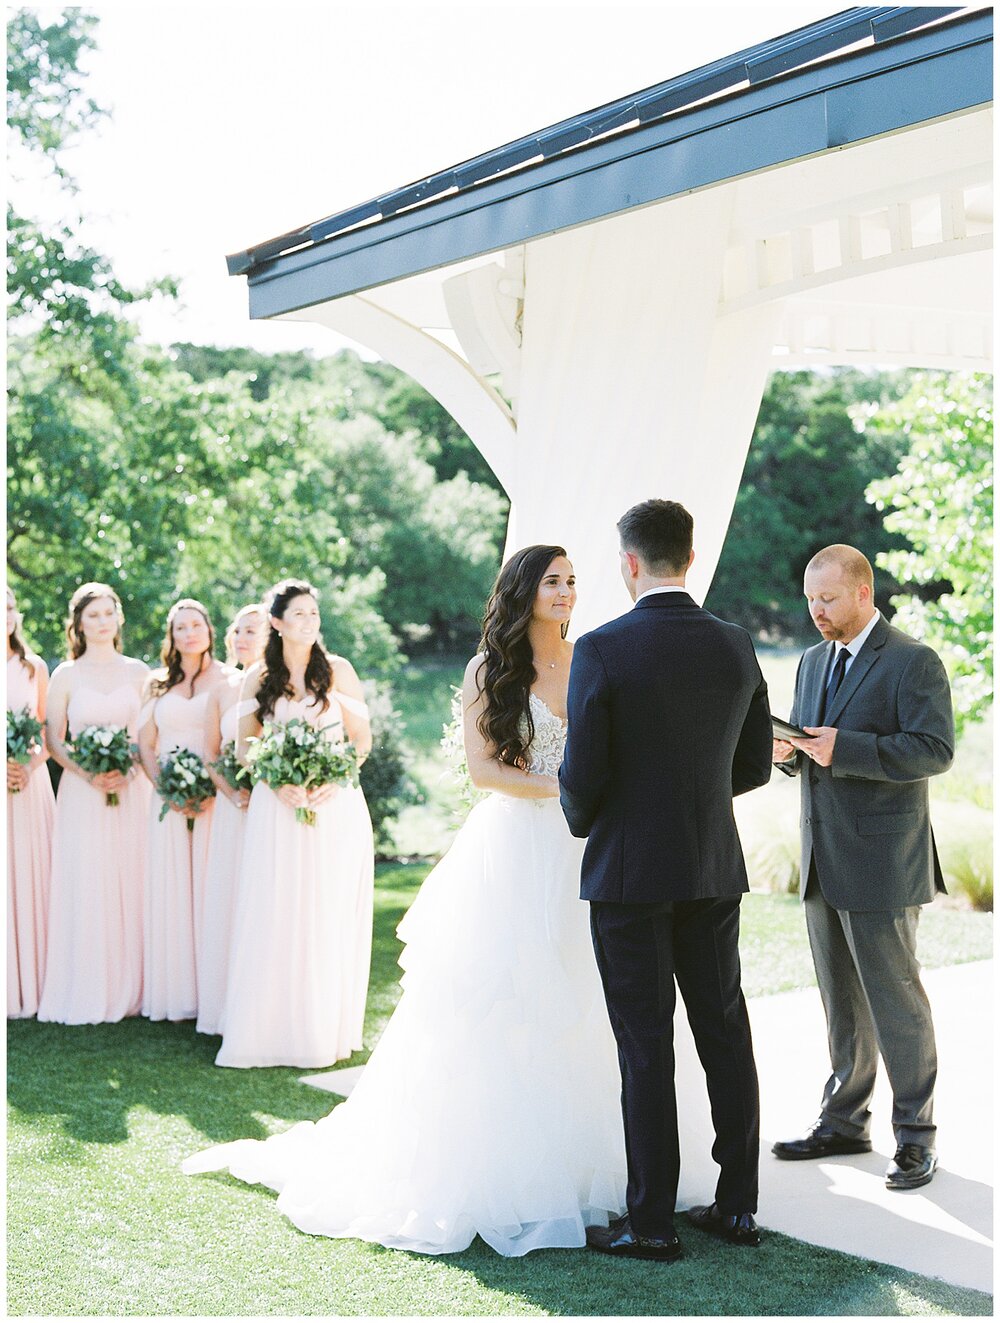 Kendall Point - Boerne TX Wedding Photography23.jpg